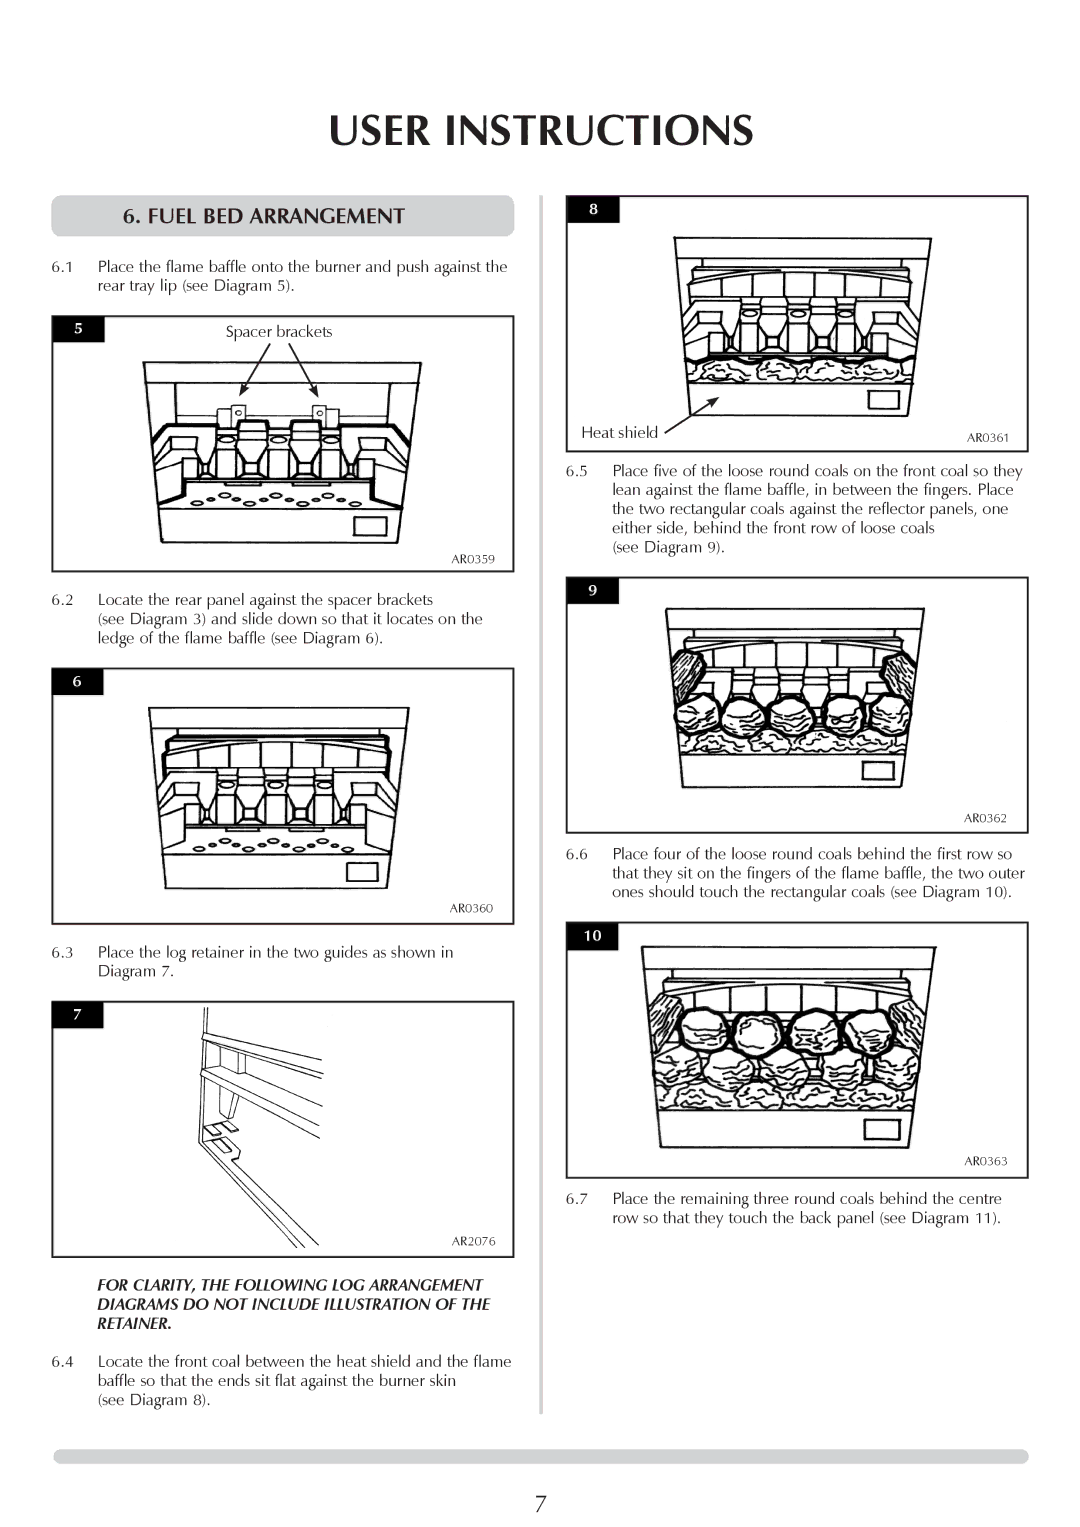 Yeoman PR1145 instruction manual User Instructionsheading, Fuel bed arrangement 